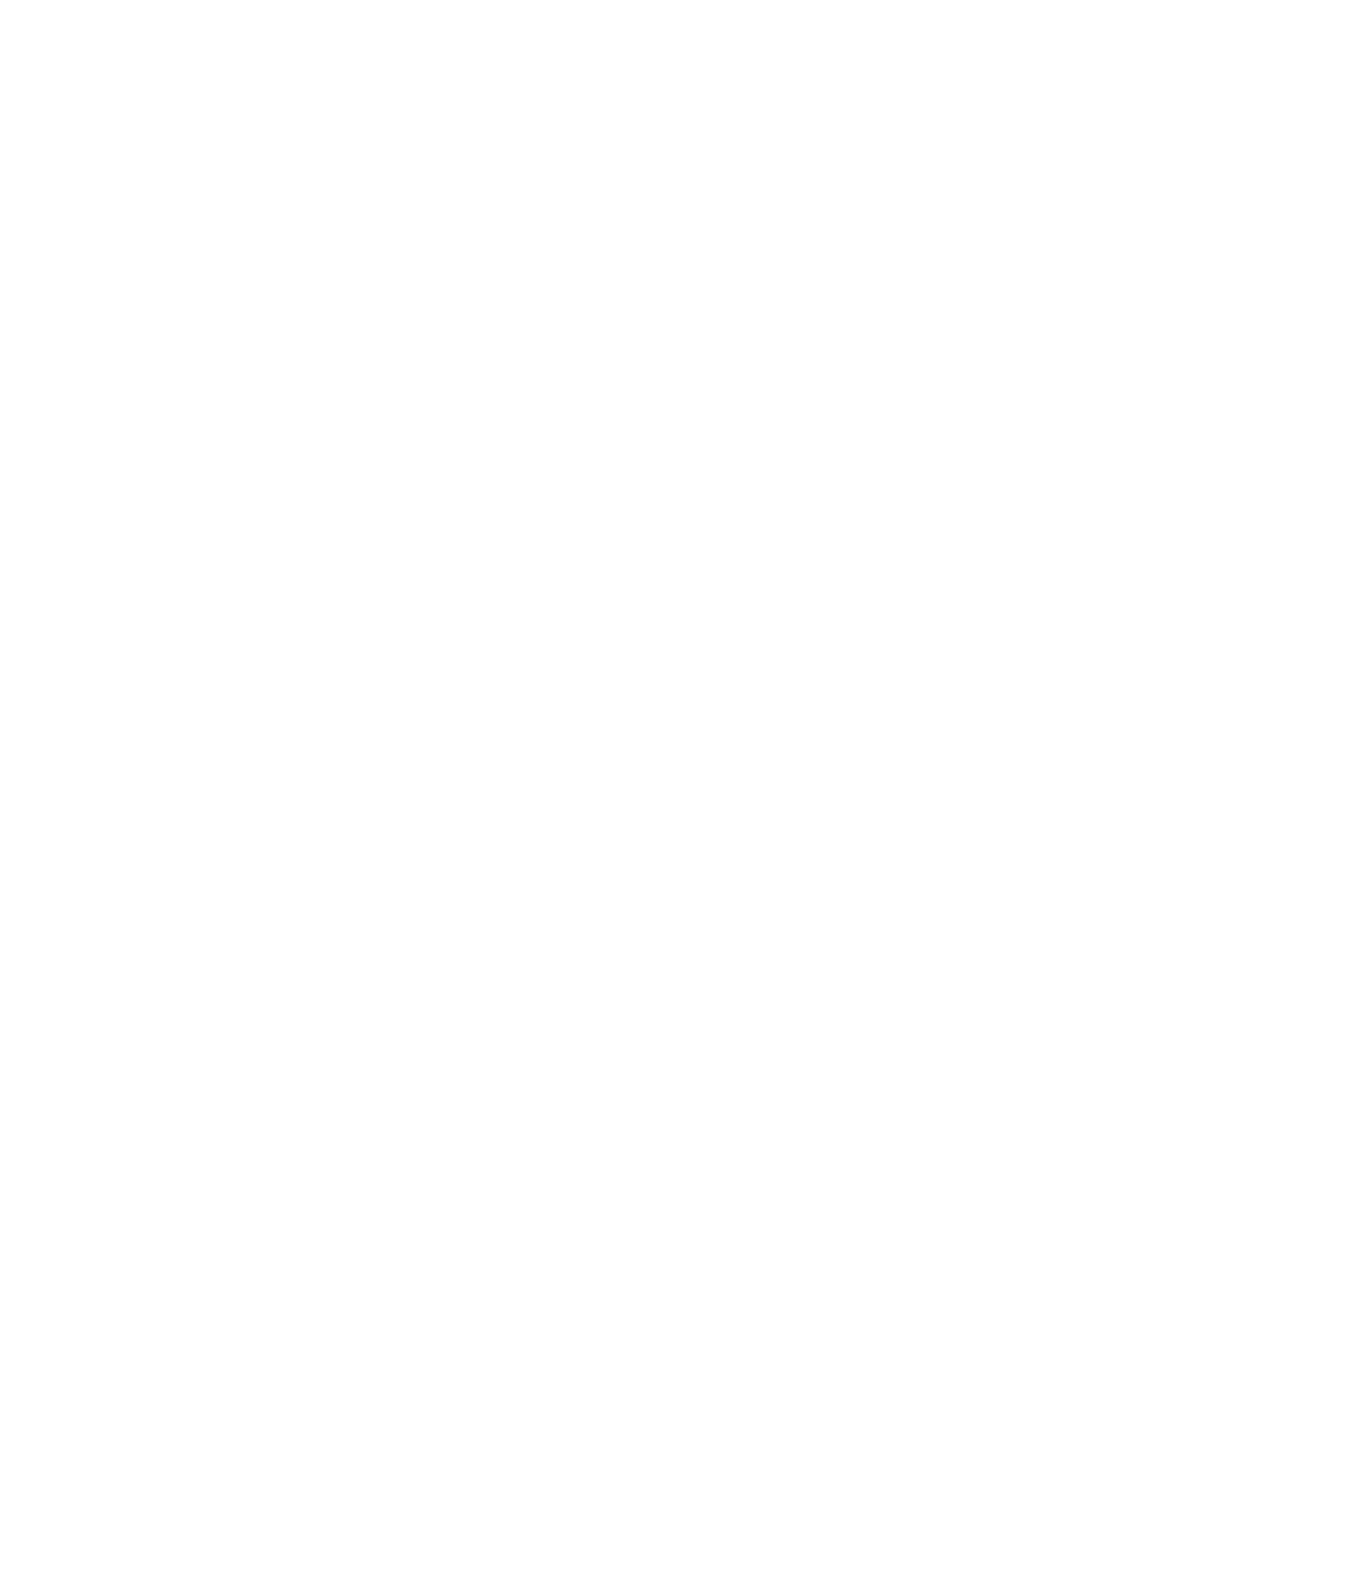 Iteris logo for dark backgrounds (transparent PNG)